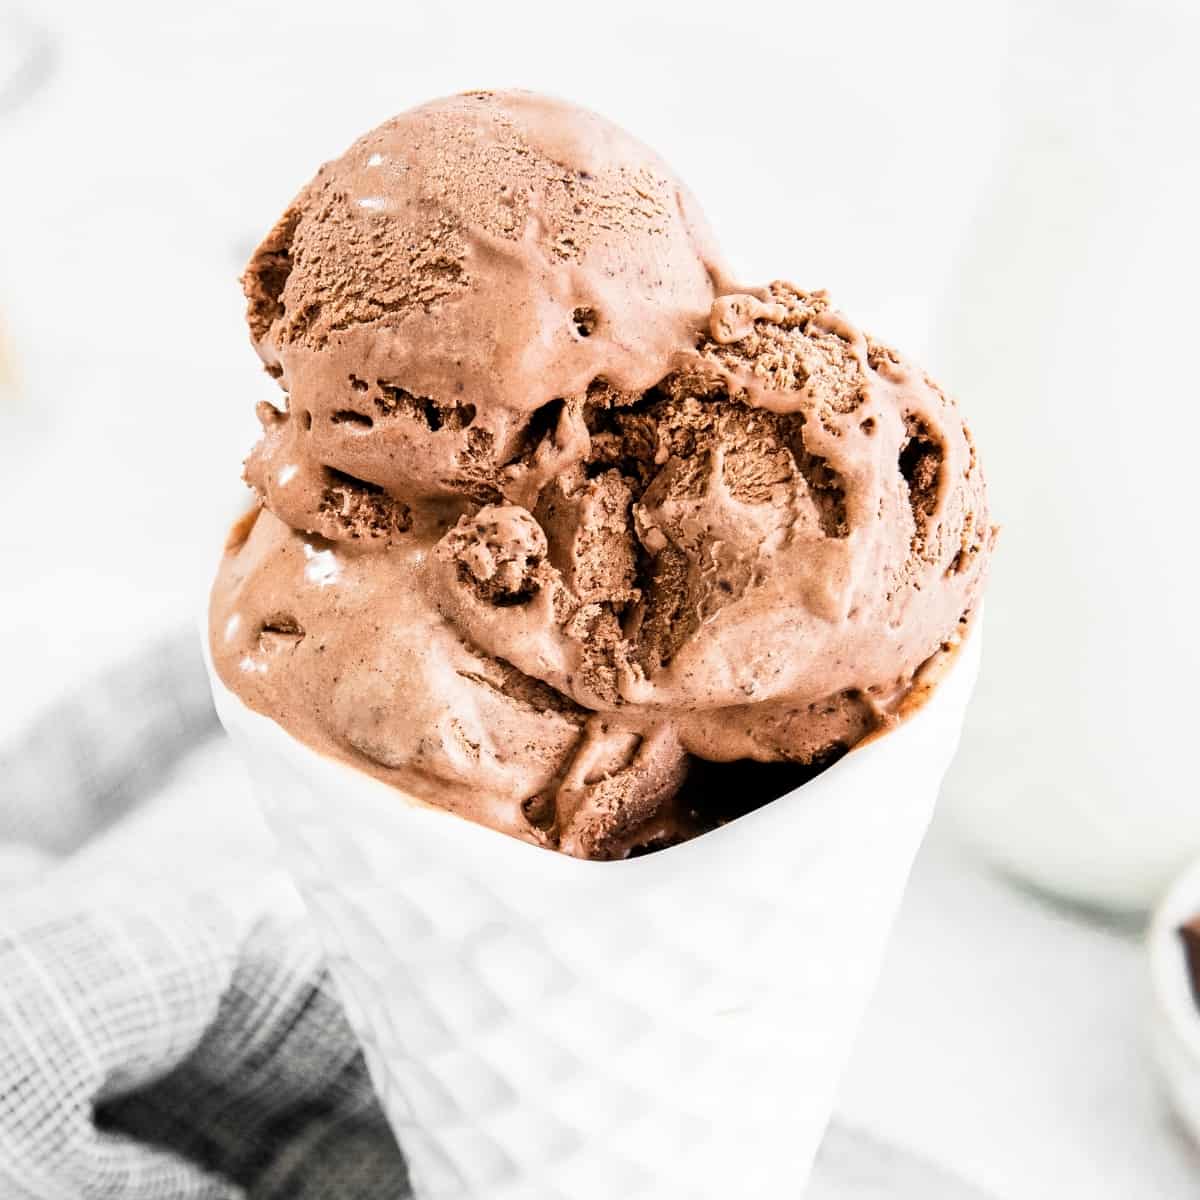 chocolate ice cream in white cone-shaped bowl